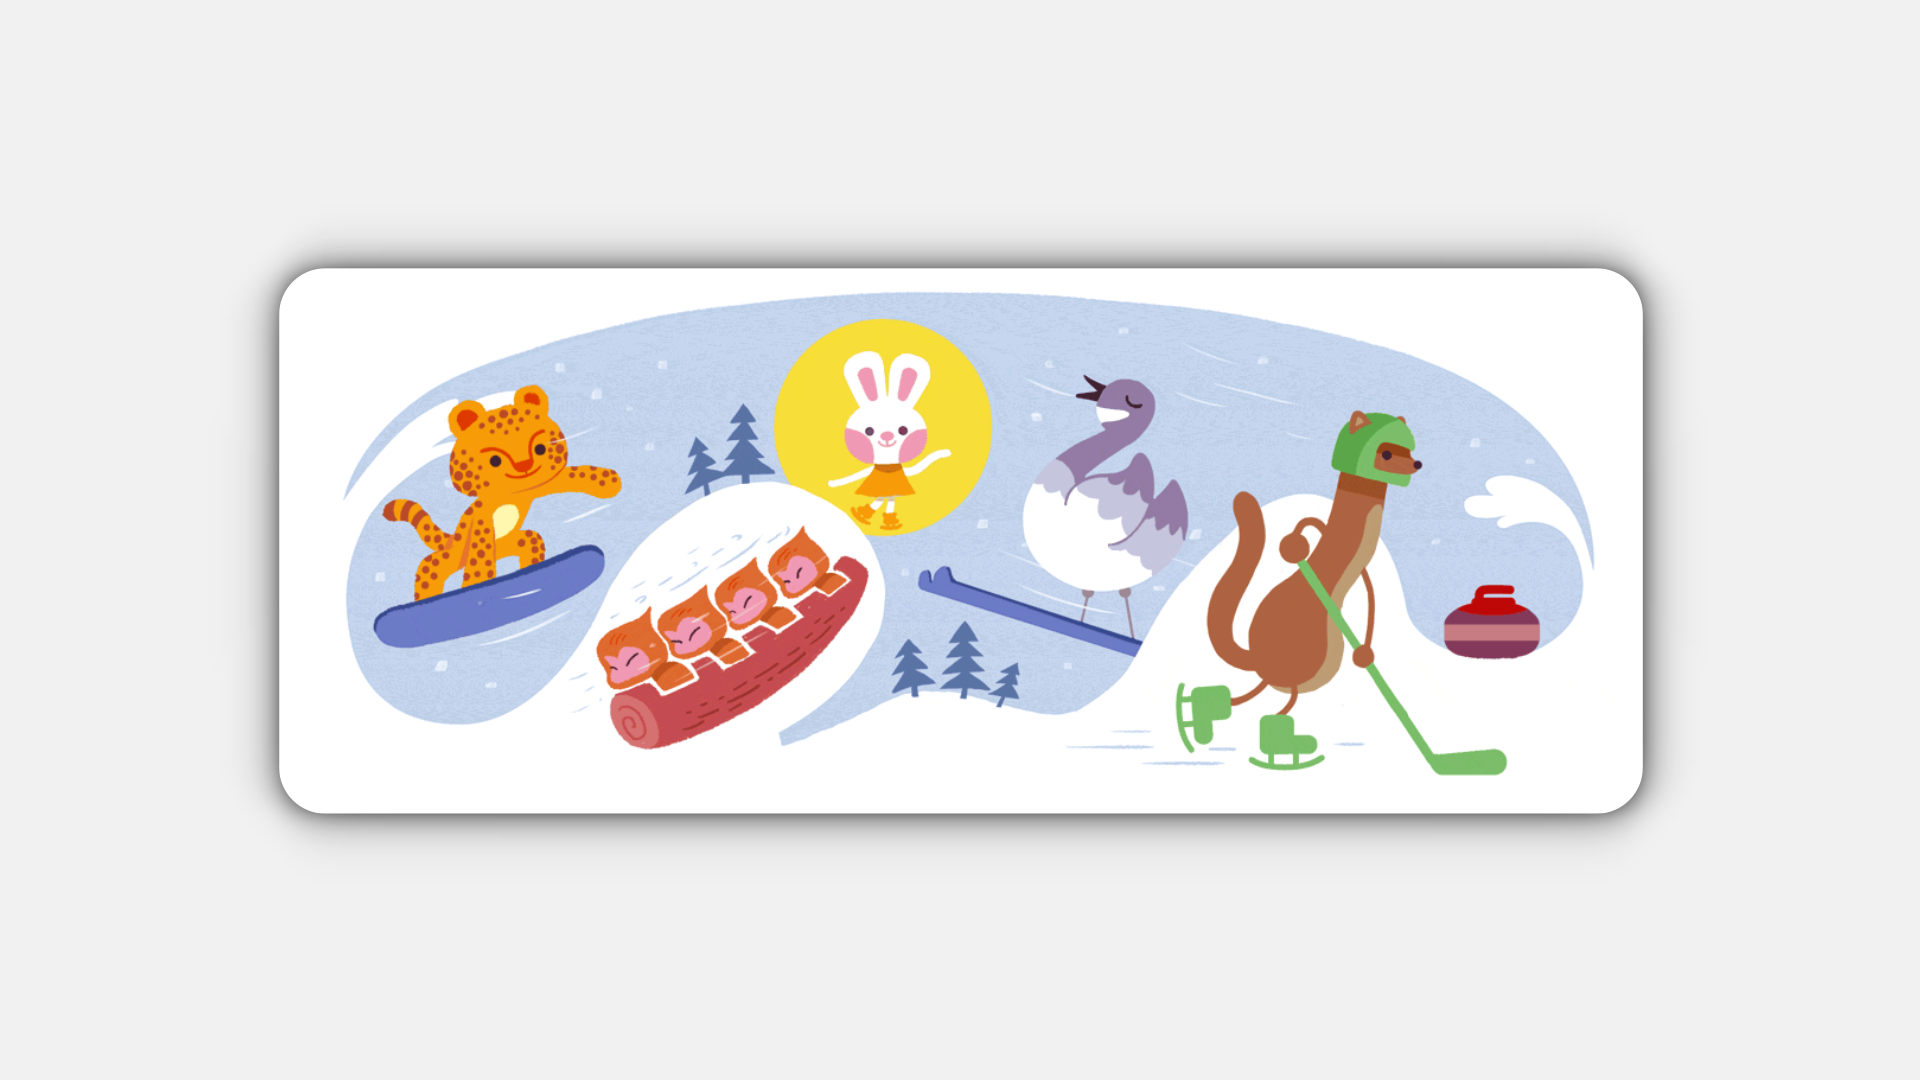 Google Doodle temático das Olimpíadas traz minijogos divertidos - NerdBunker